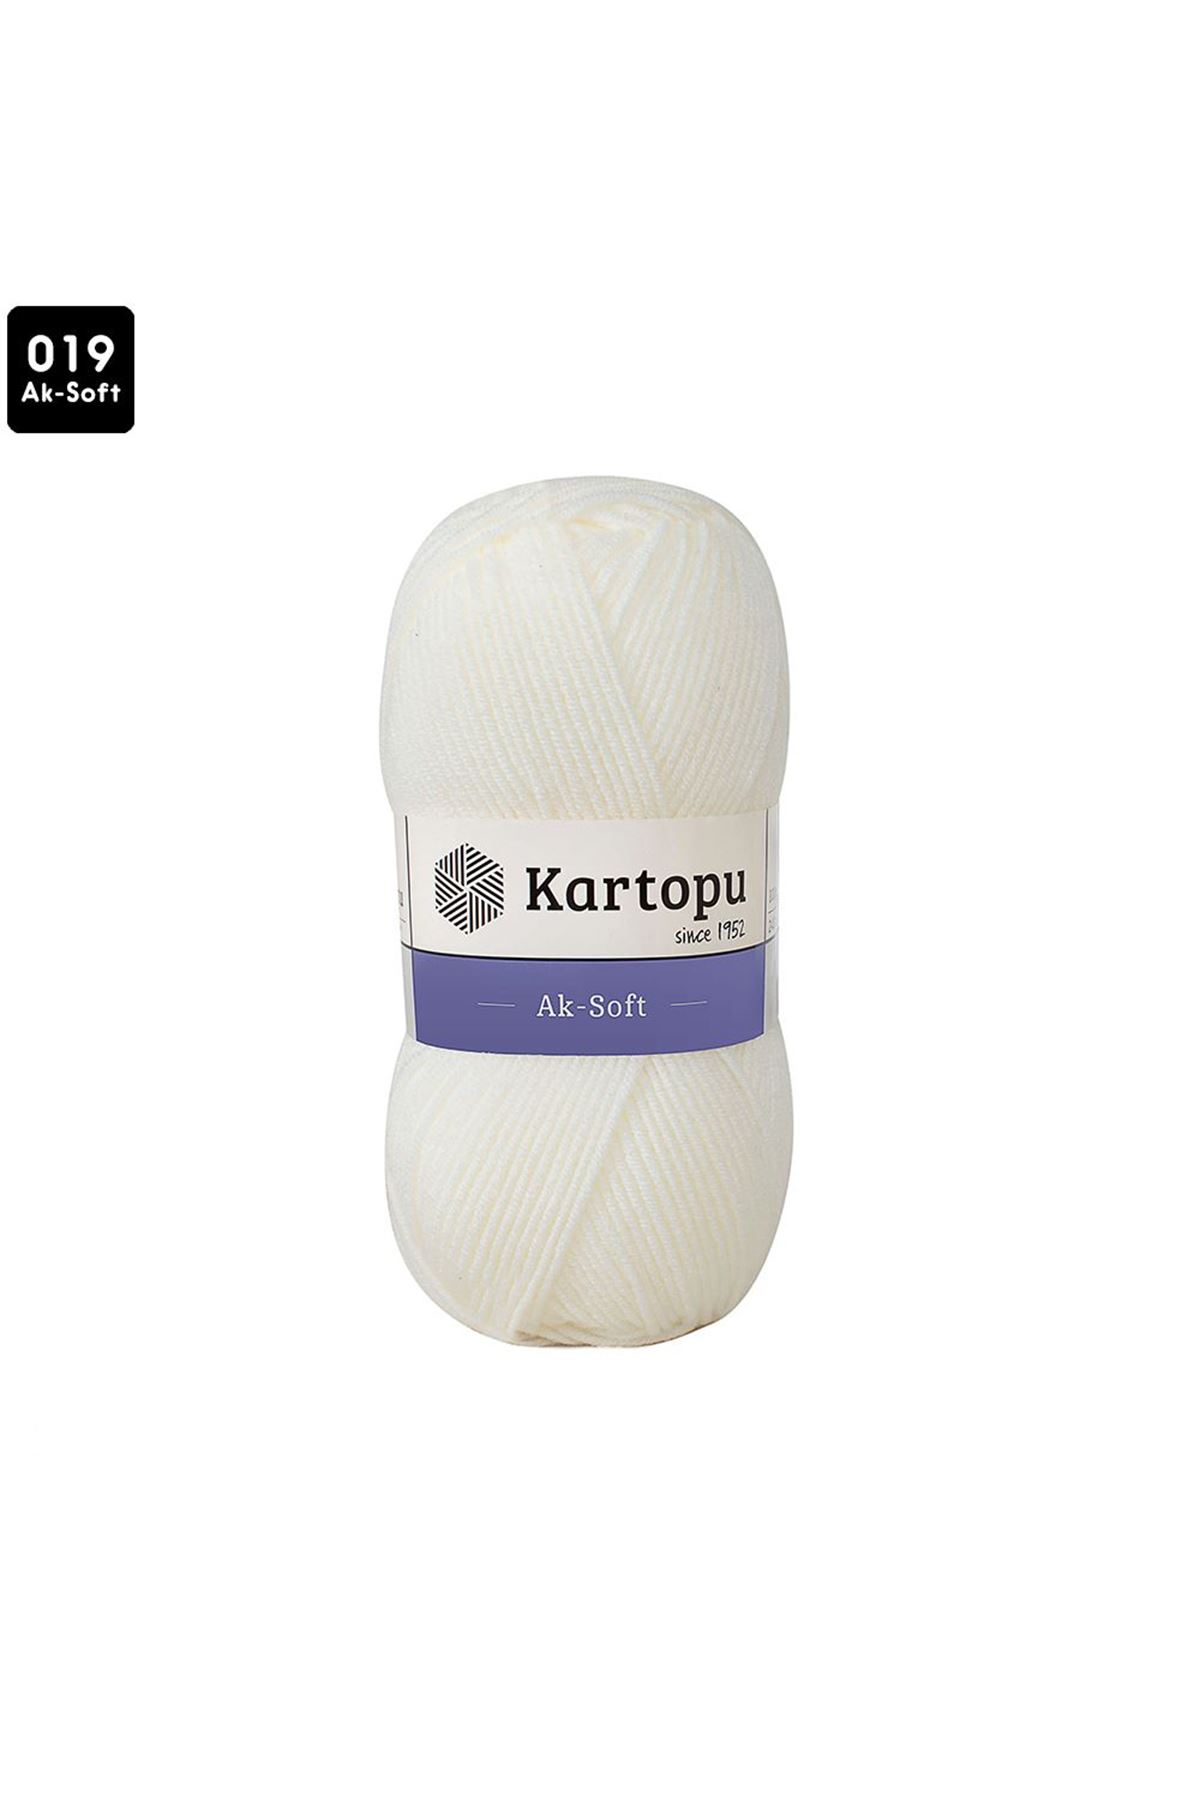 Kartopu Ak-Soft Renk No:019